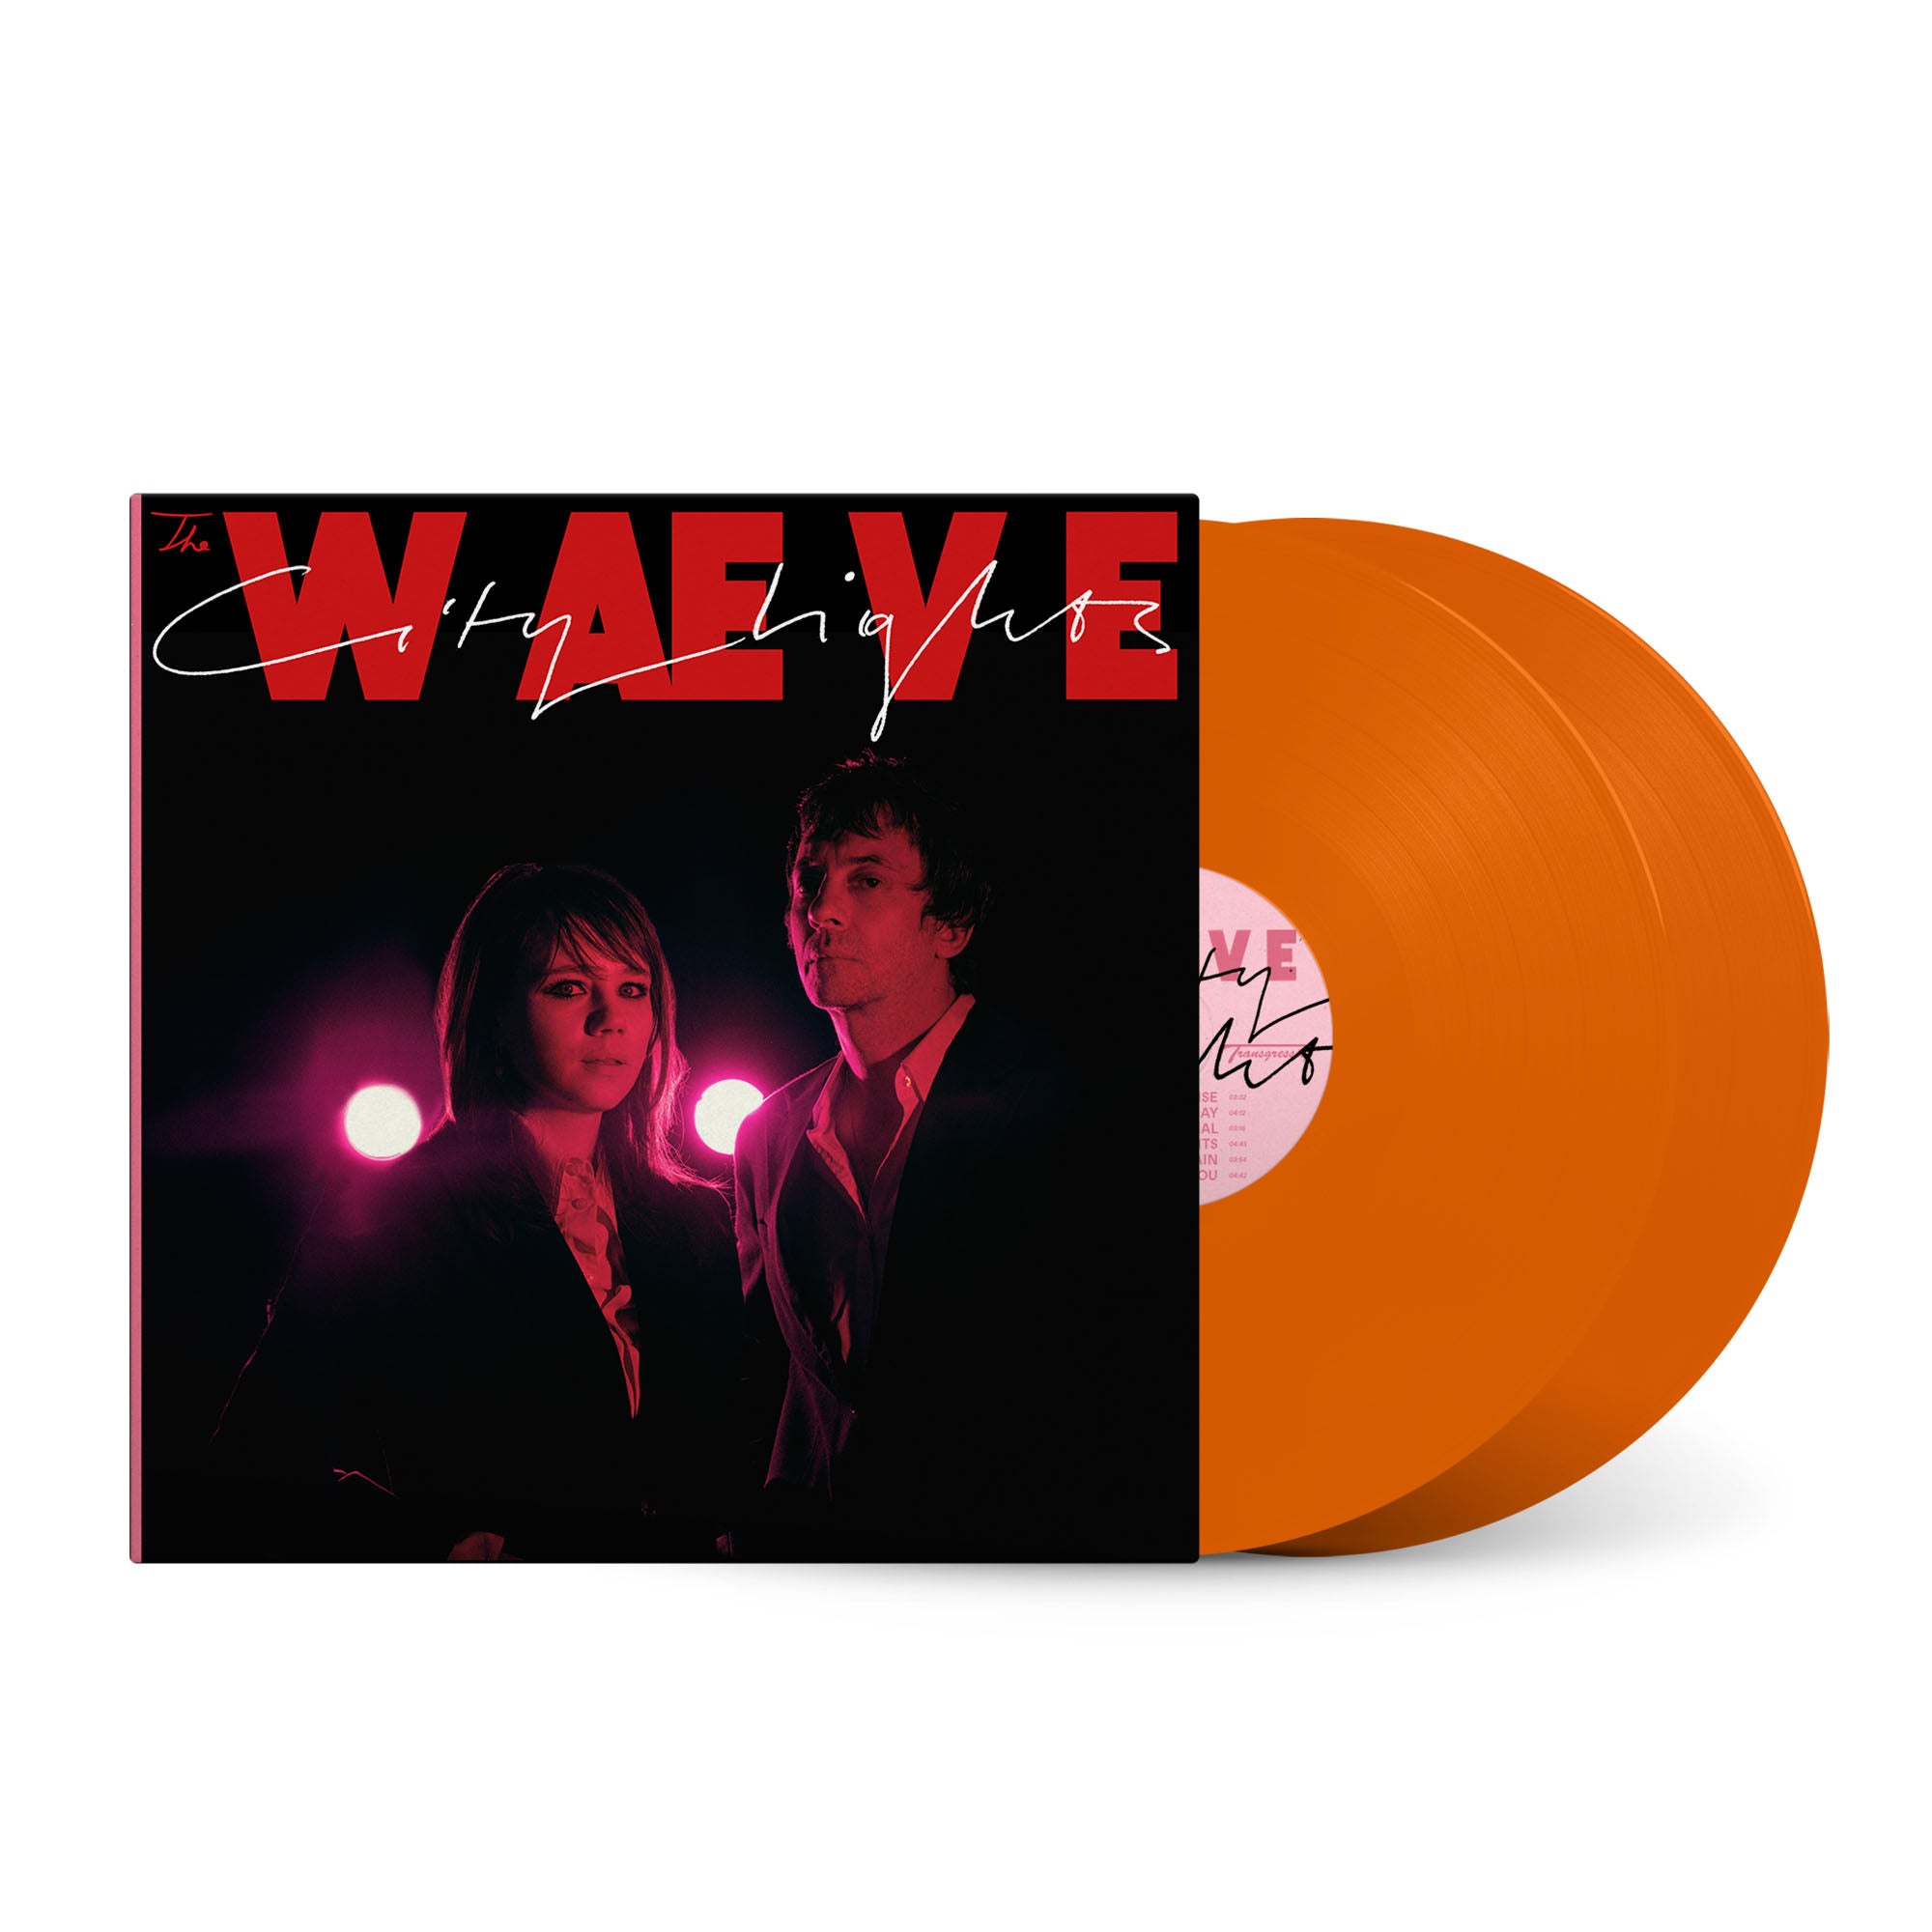 THE WAEVE (Graham Coxon and Rose Elinor Dougall) - City Lights: Limited Orange Vinyl 2LP